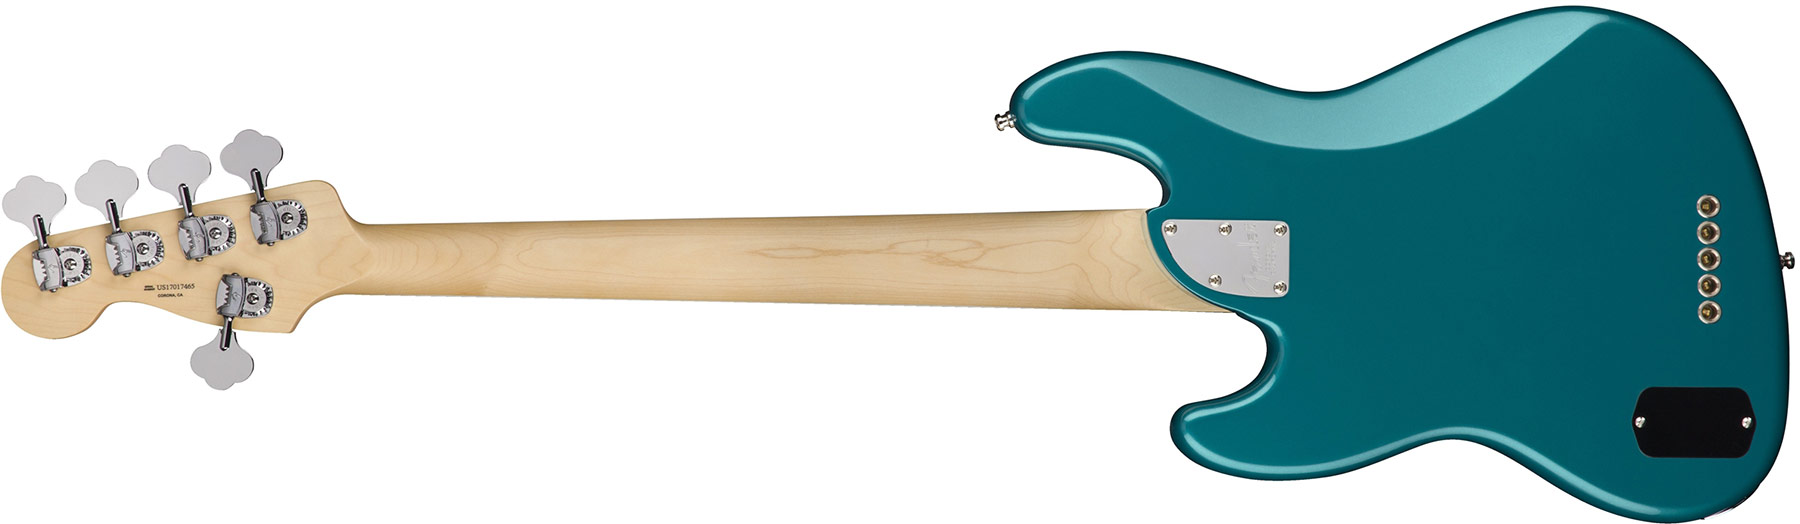 Fender American Elite Jazz Bass V Usa Eb - Ocean Turquoise - Basse Électrique Solid Body - Variation 1